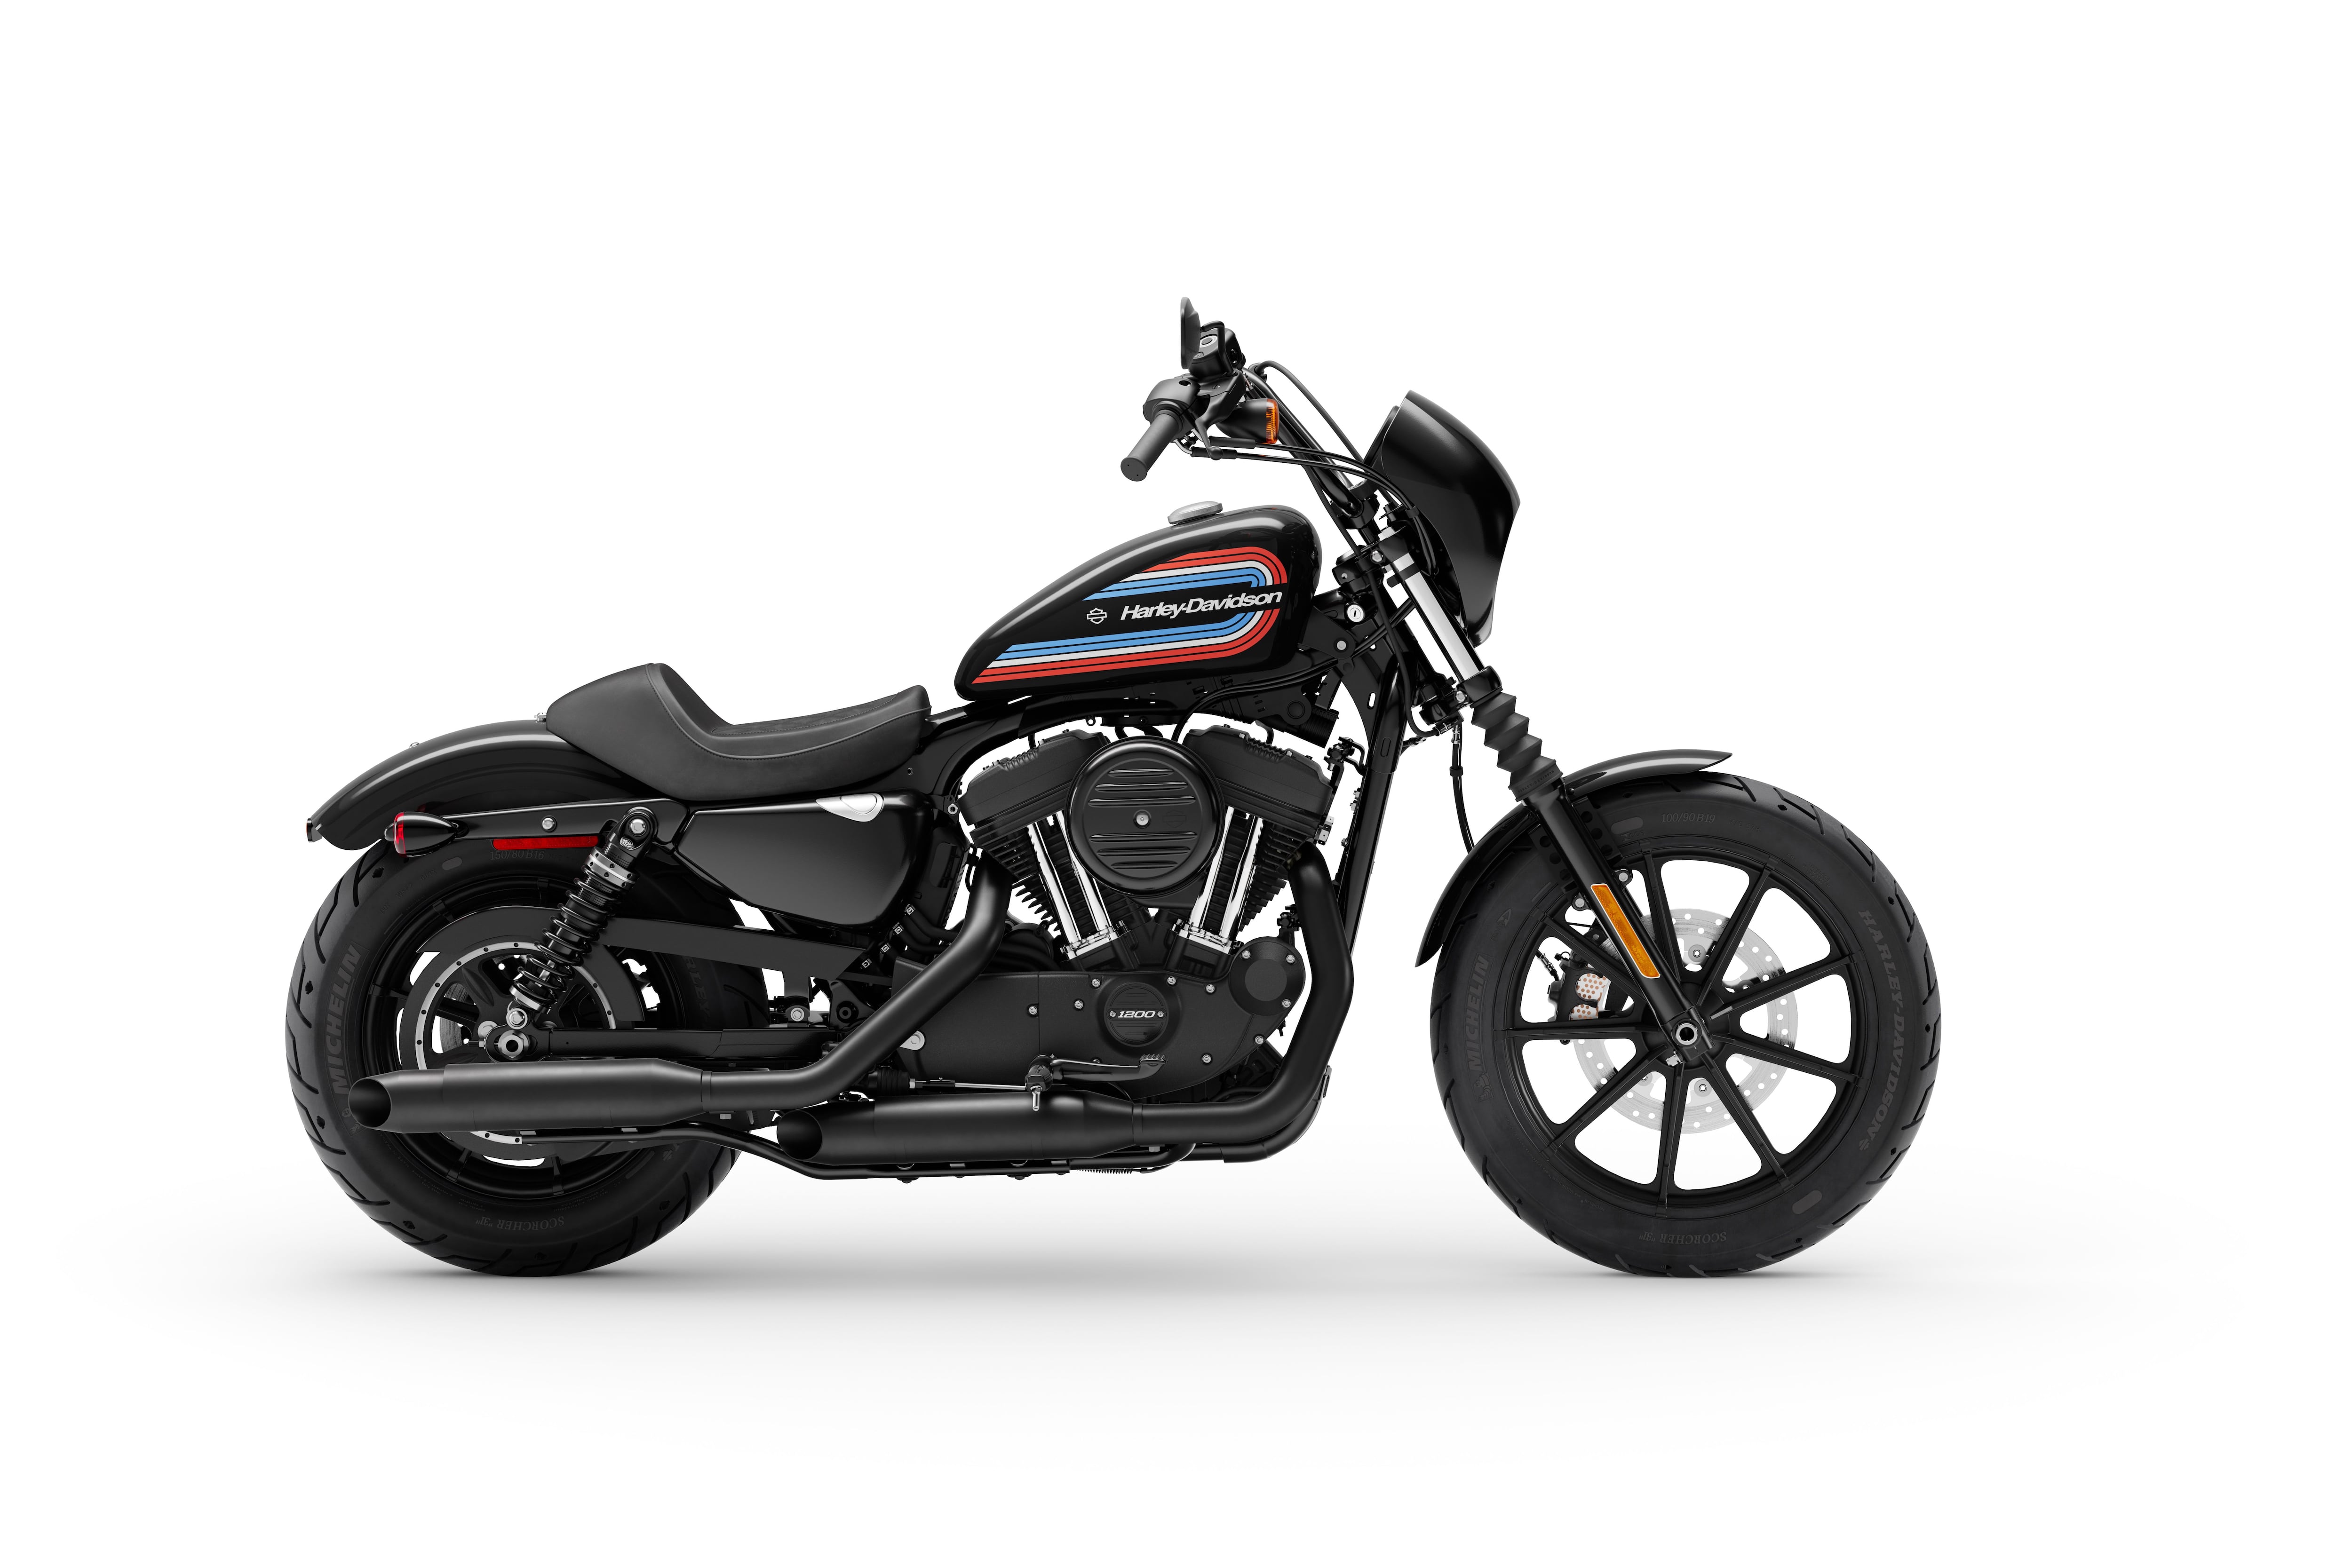 2020 Harley-Davidson Sportster Iron 1200 Buyer's Guide: Specs